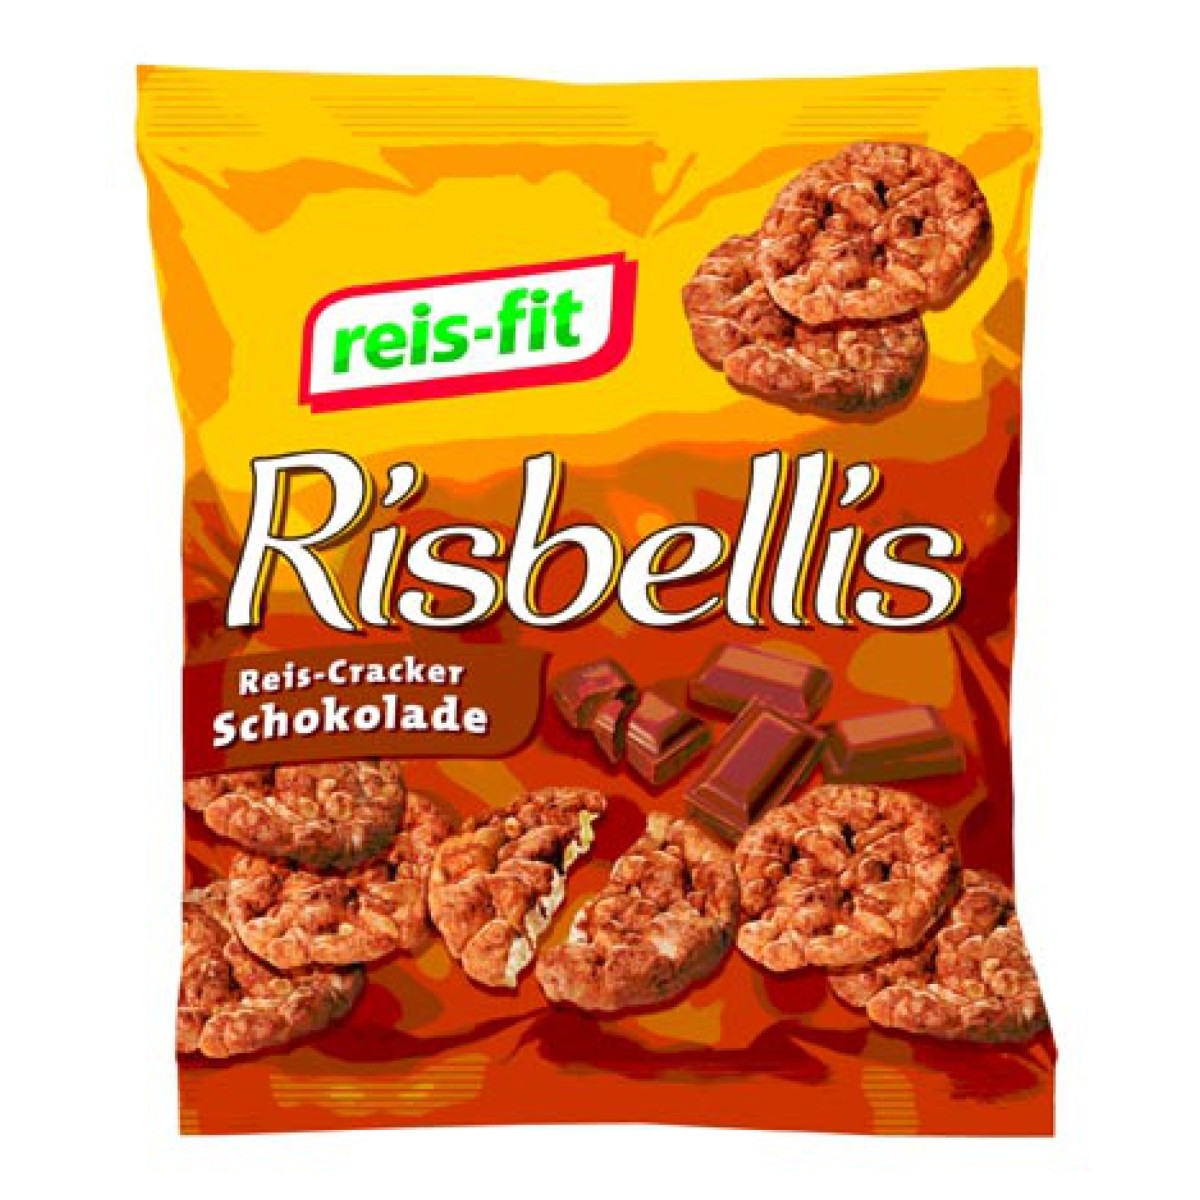 → Schokolade Risbellis Reis-Cracker reis-fit Barbecue REGAL und